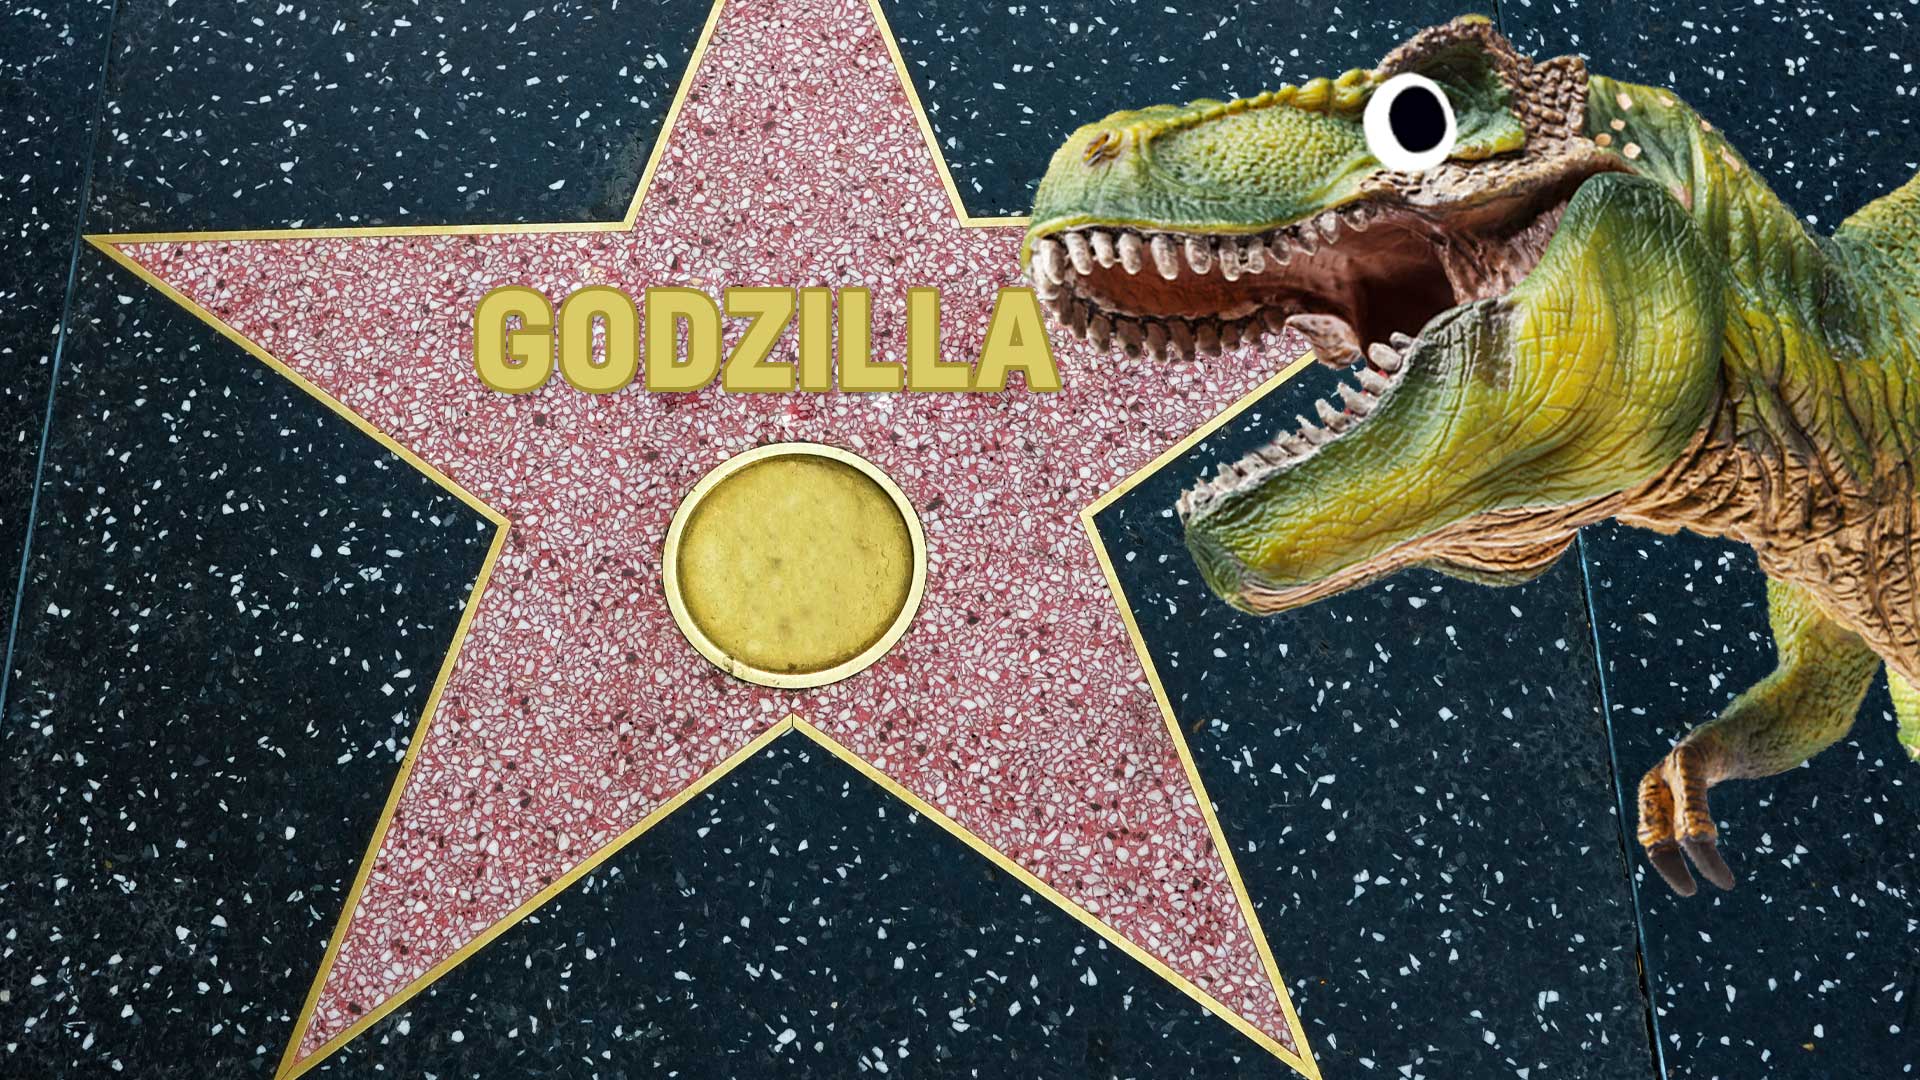 Godzilla's star on The Hollywood Walk of Fame